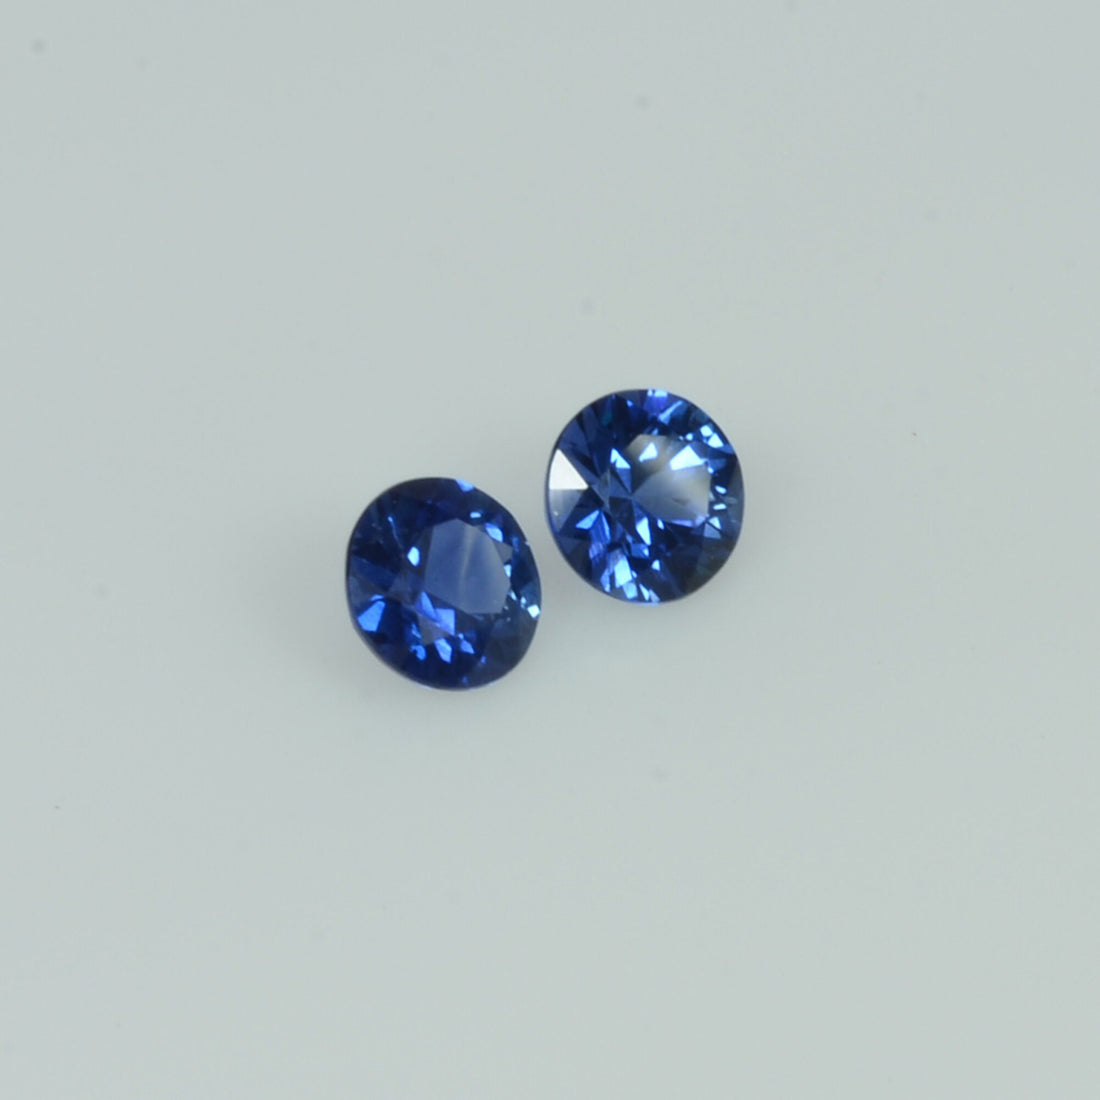 4 mm Natural Blue Sapphire Loose Pair Gemstone Round Cut